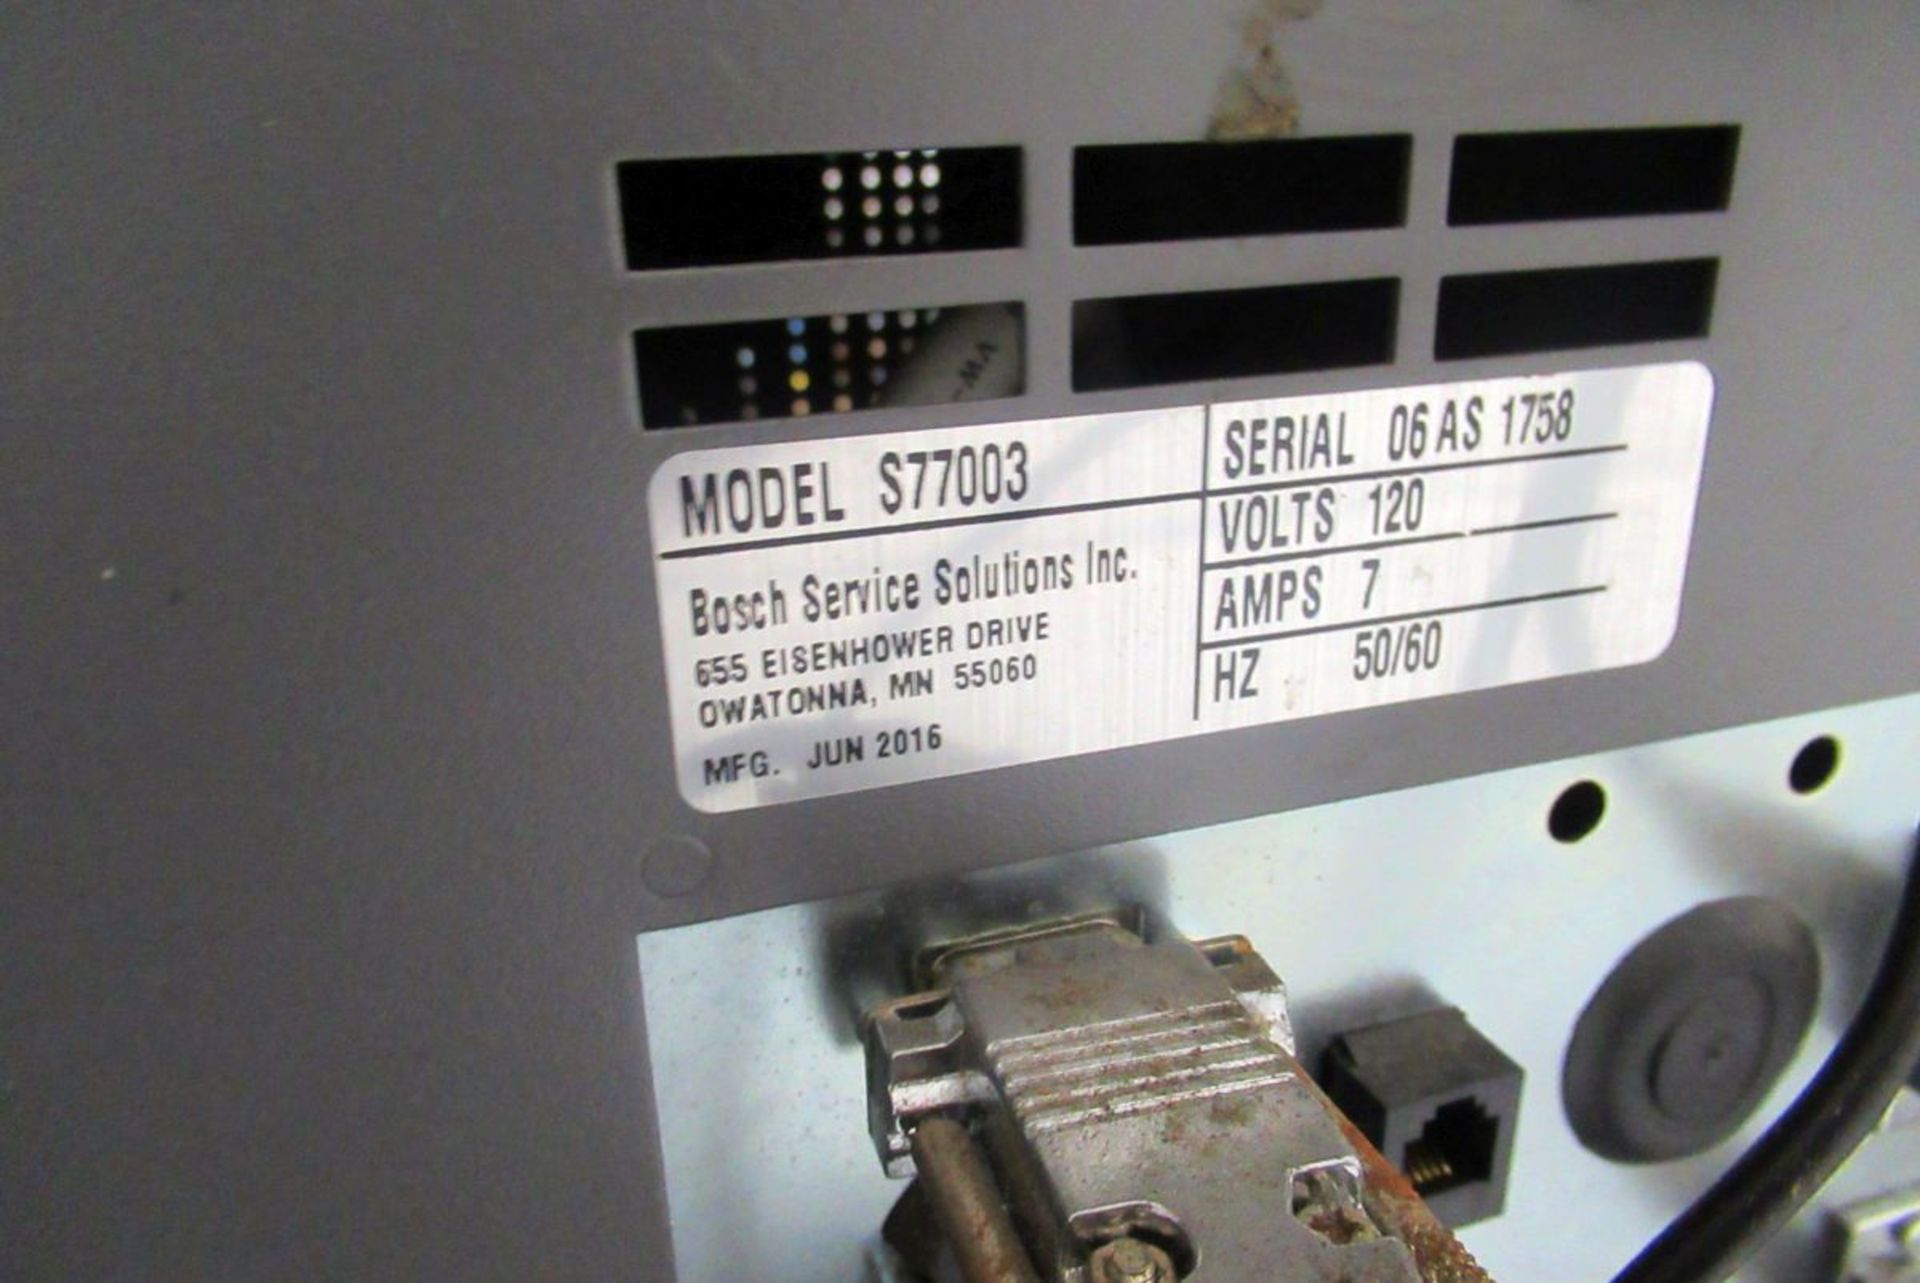 Smog Tamer Emissions Inspection Unit, Printer, Bosch Diagnostics, Etc. - Image 7 of 12